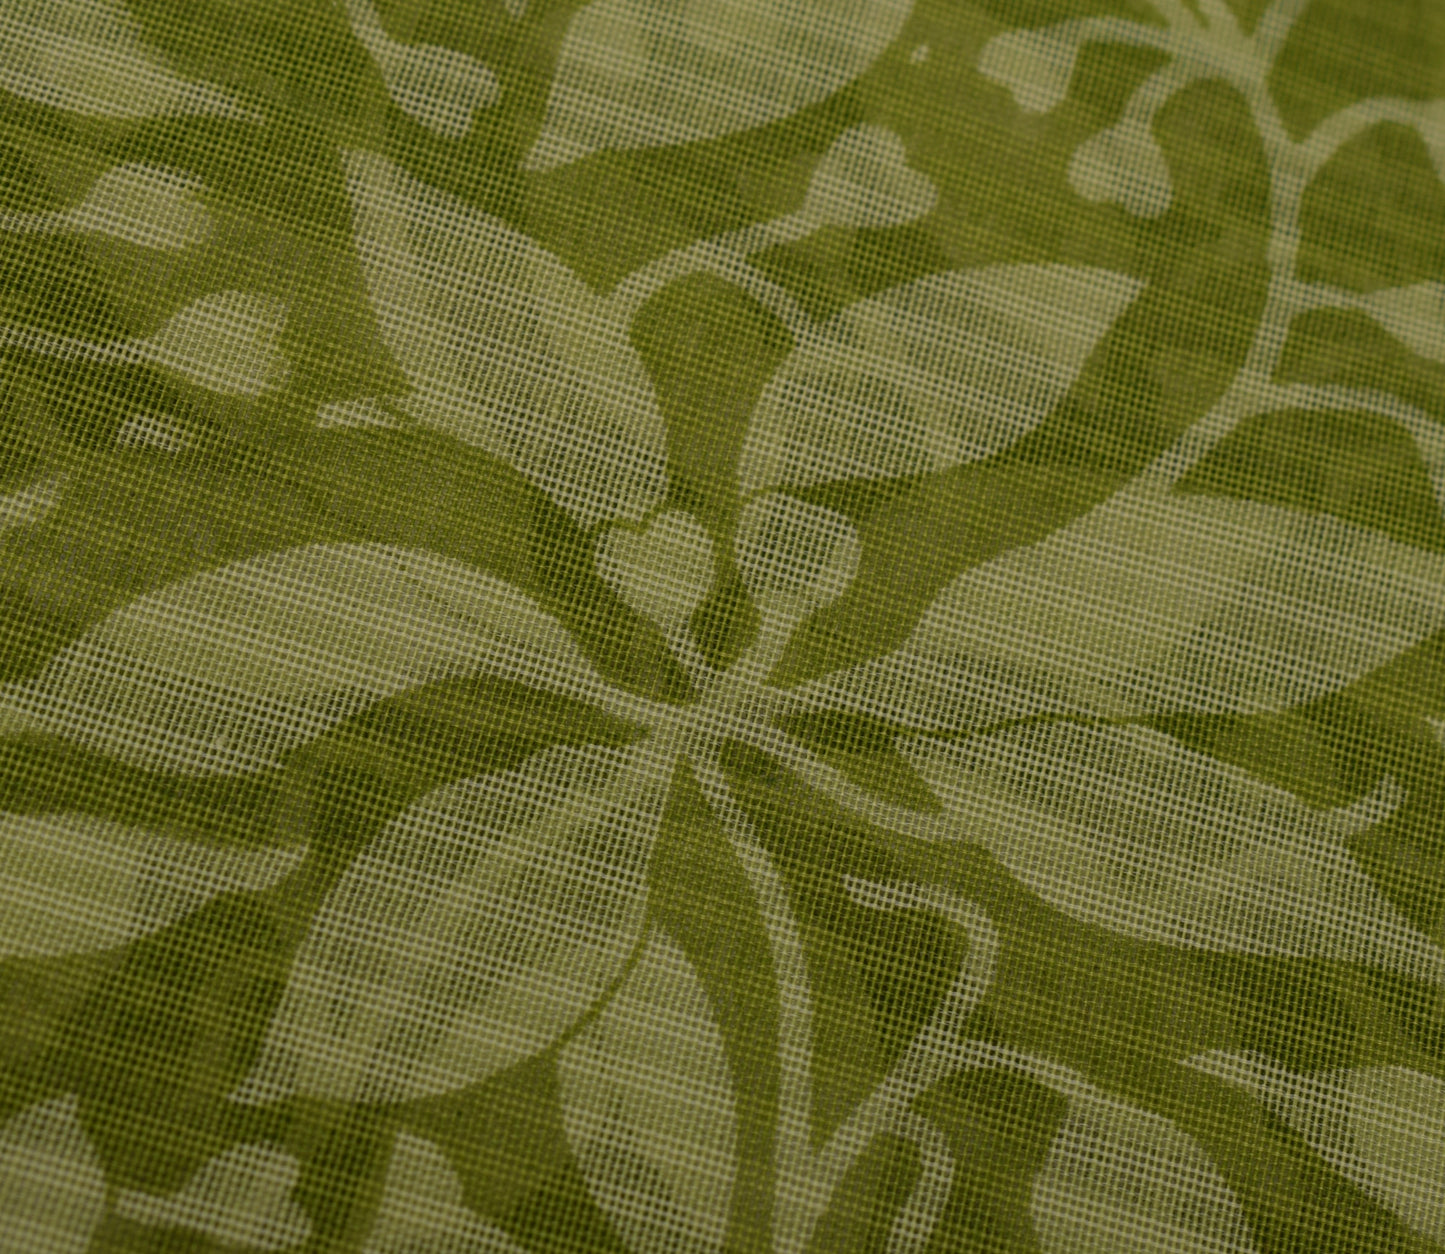 Sushila Vintage Green Saree Blend Cotton Printed Floral Soft 5 Yard Craft Fabric